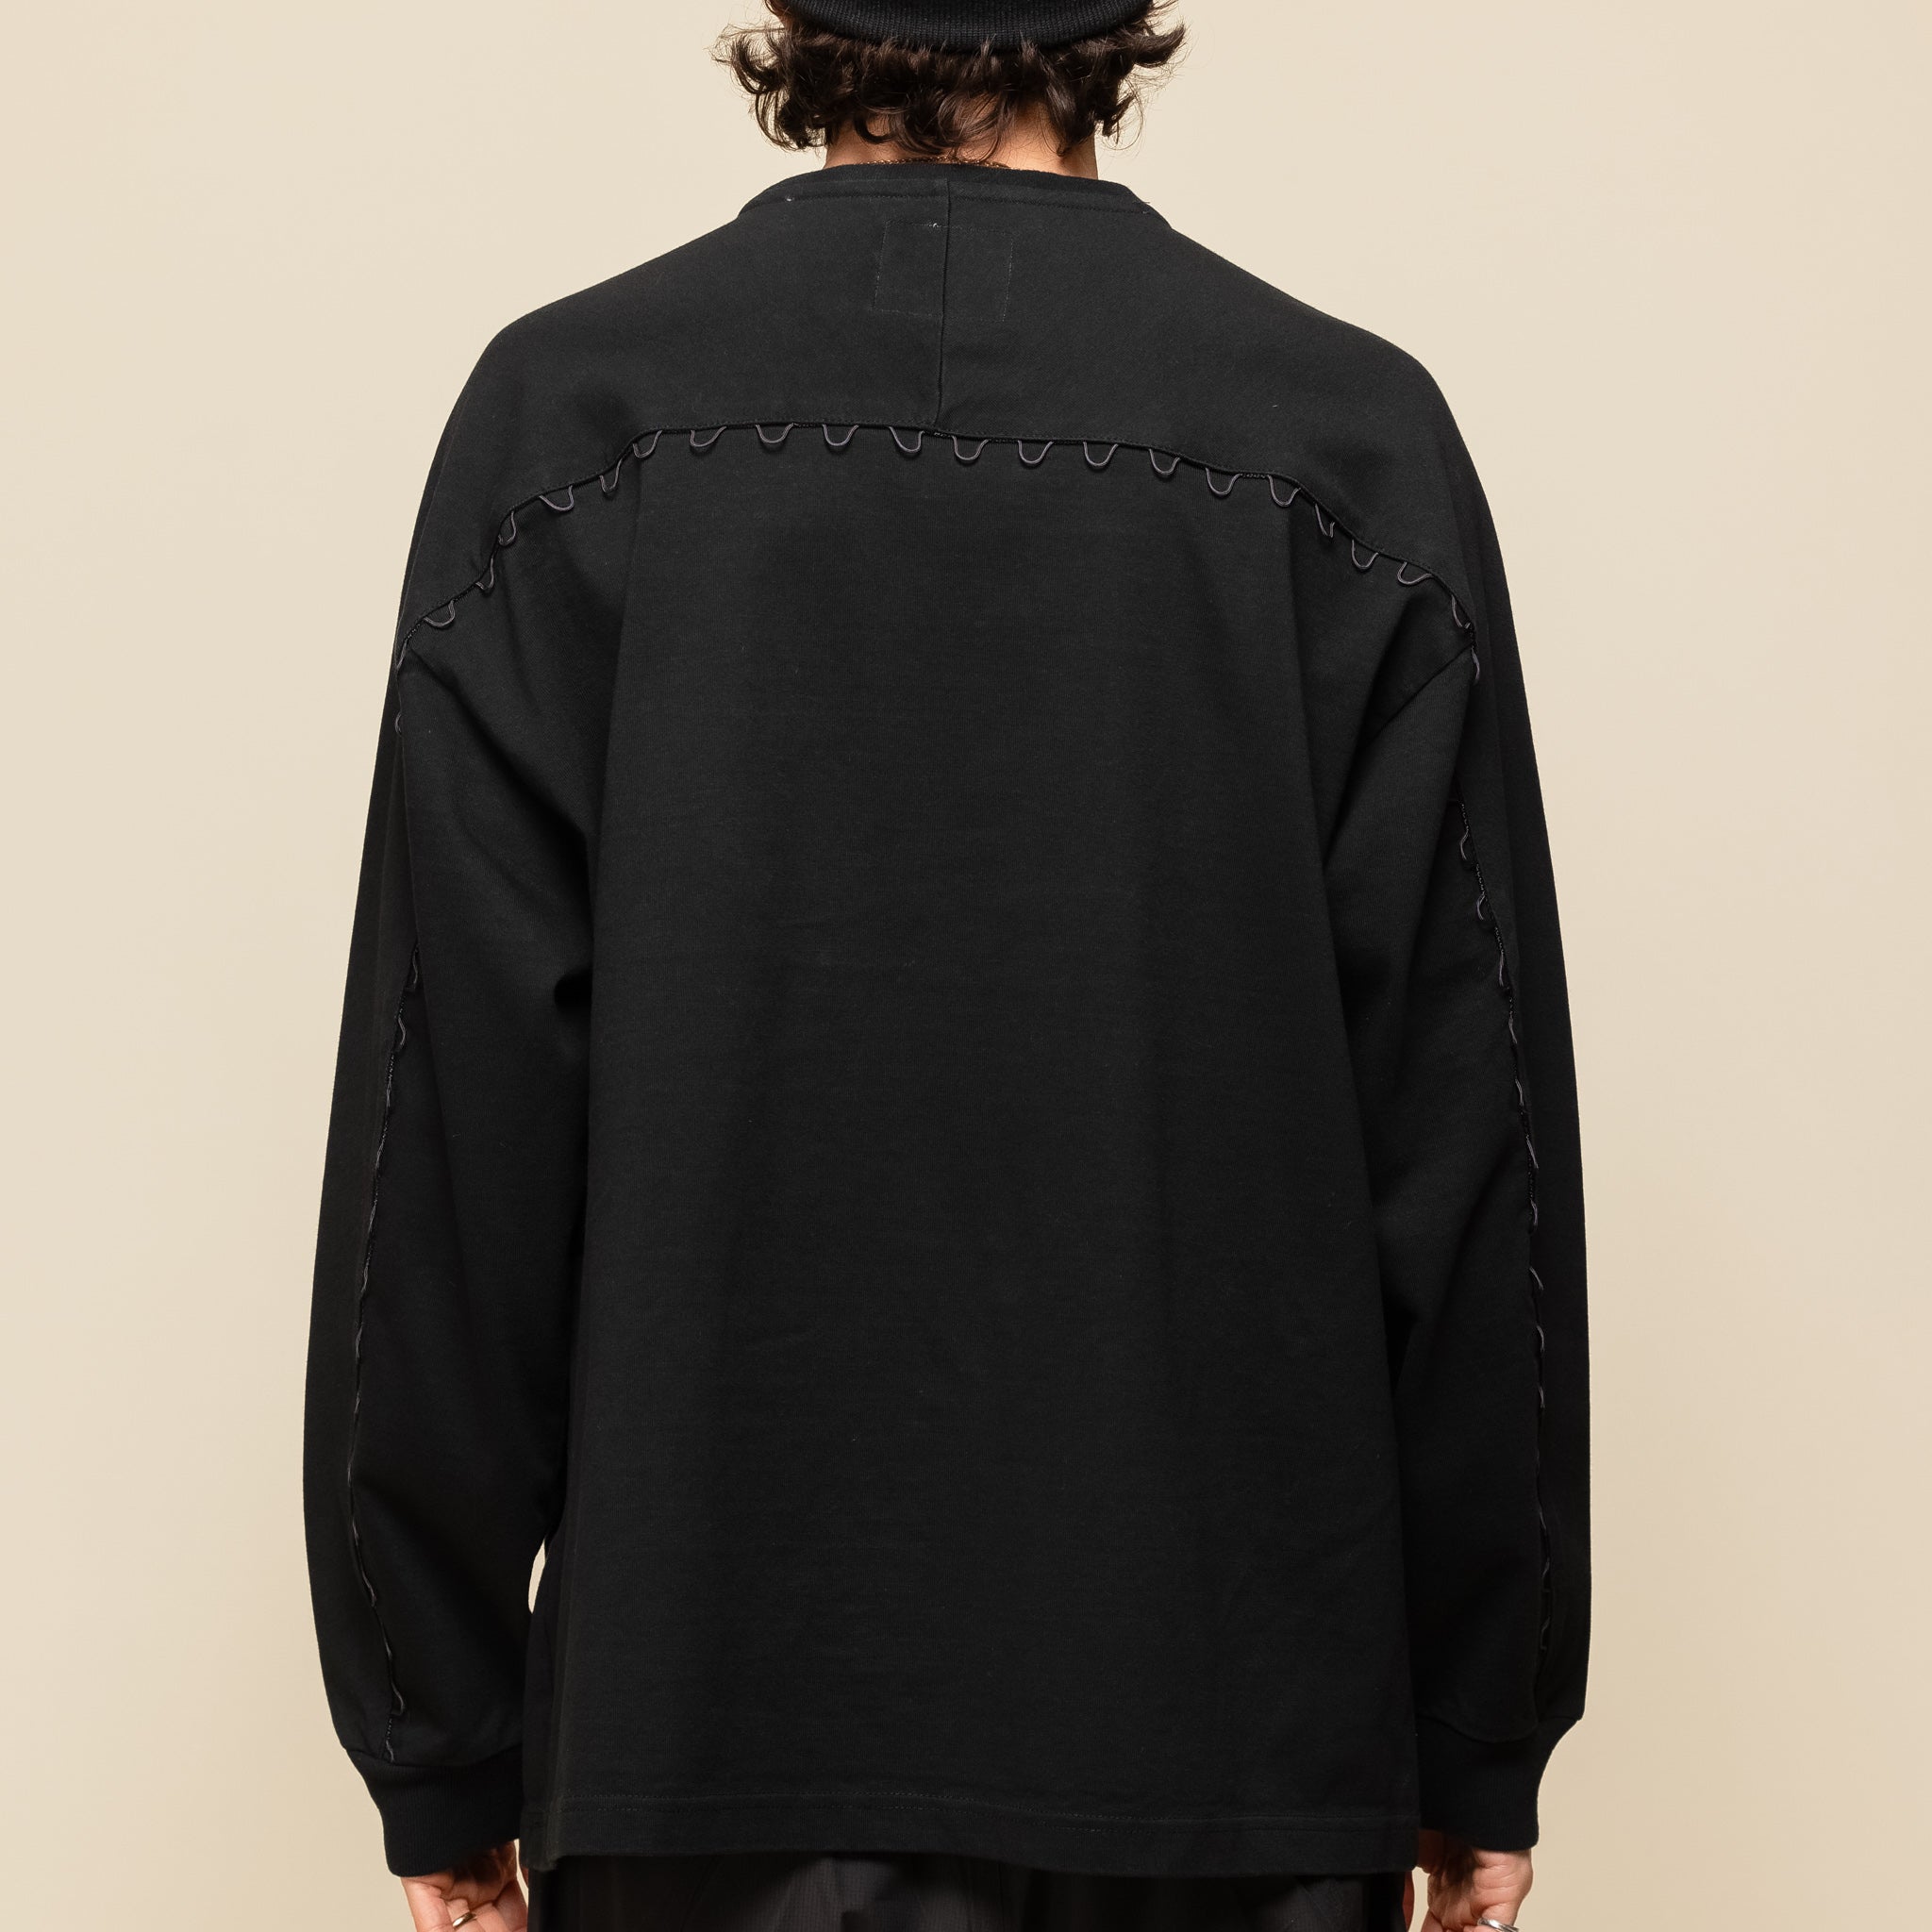 CMF Comfy Outdoor Garment - Heavy Cotton Cord L/S T-Shirt - Black